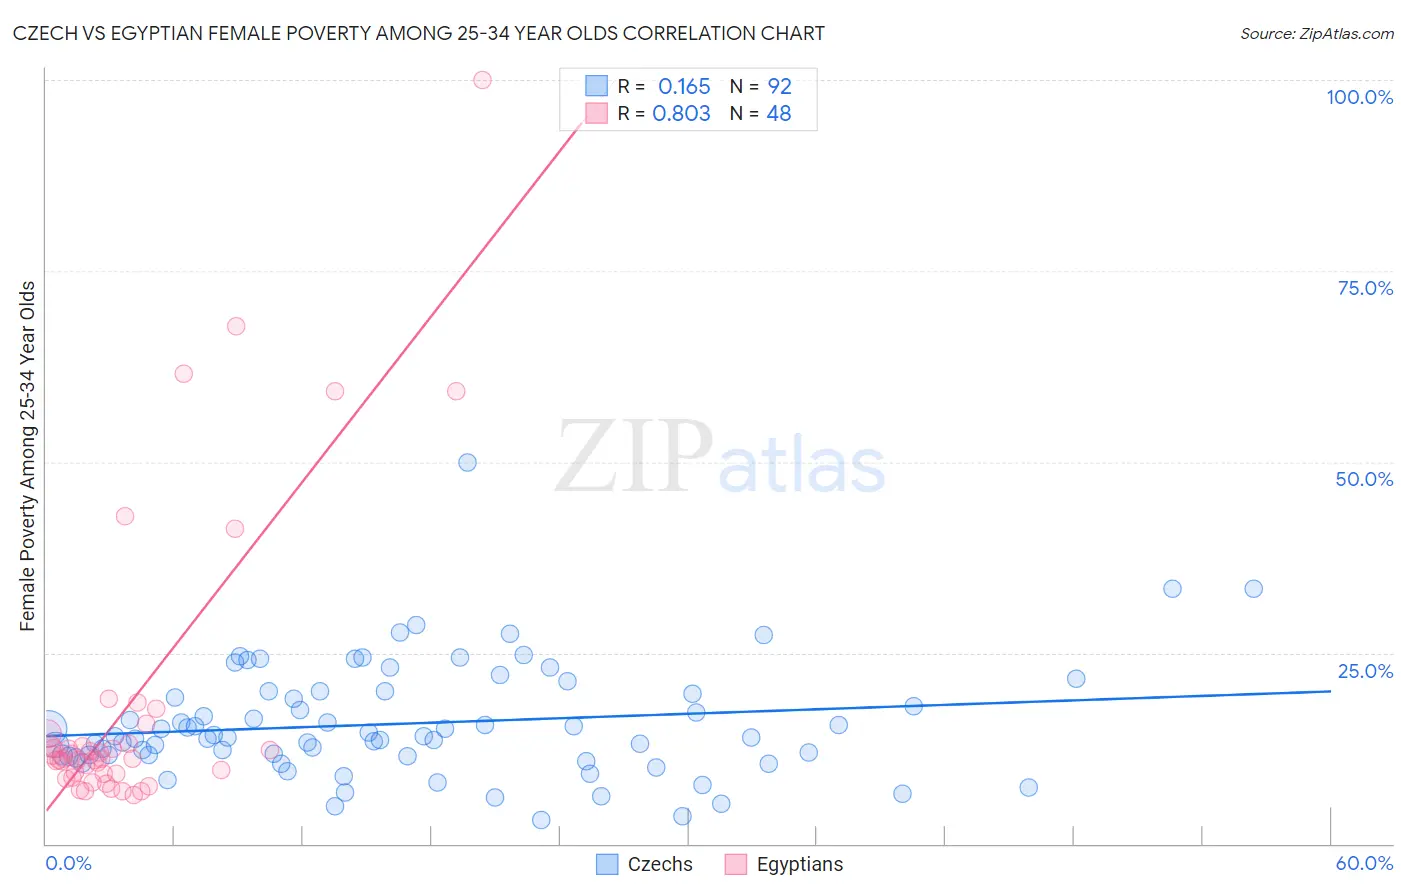 Czech vs Egyptian Female Poverty Among 25-34 Year Olds